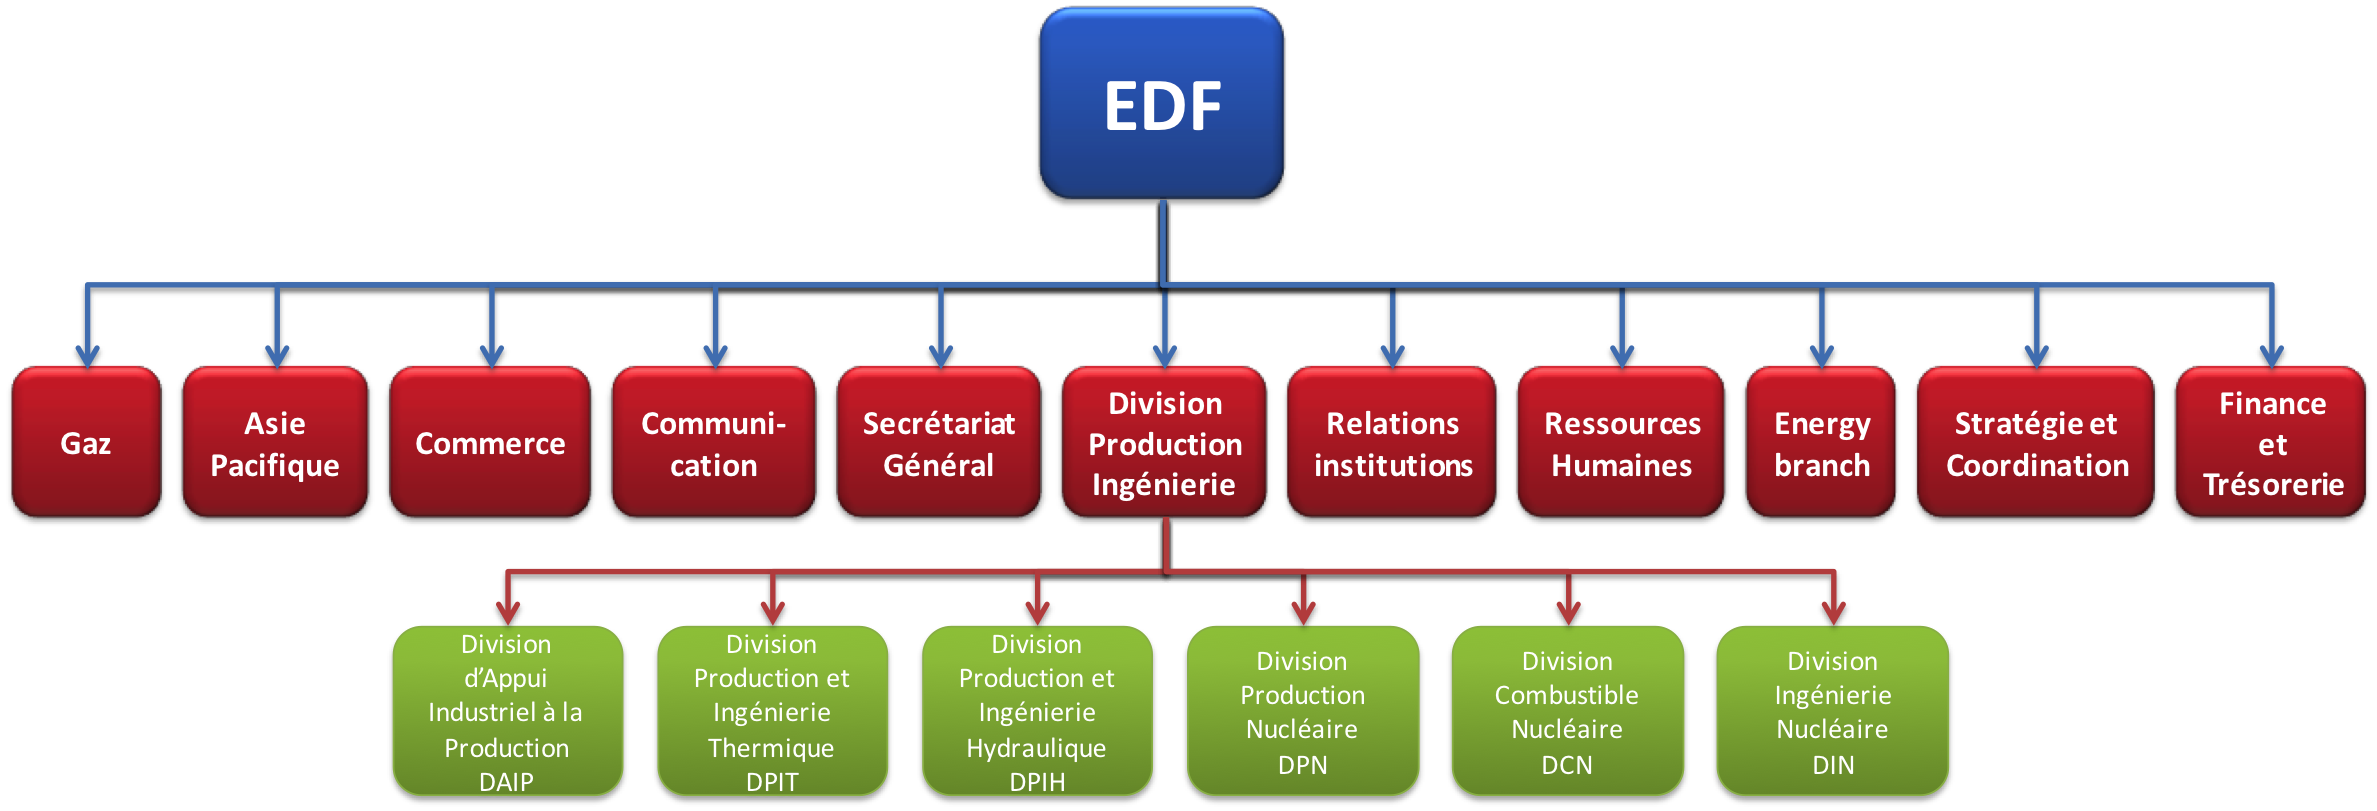 Organisation du groupe EDF